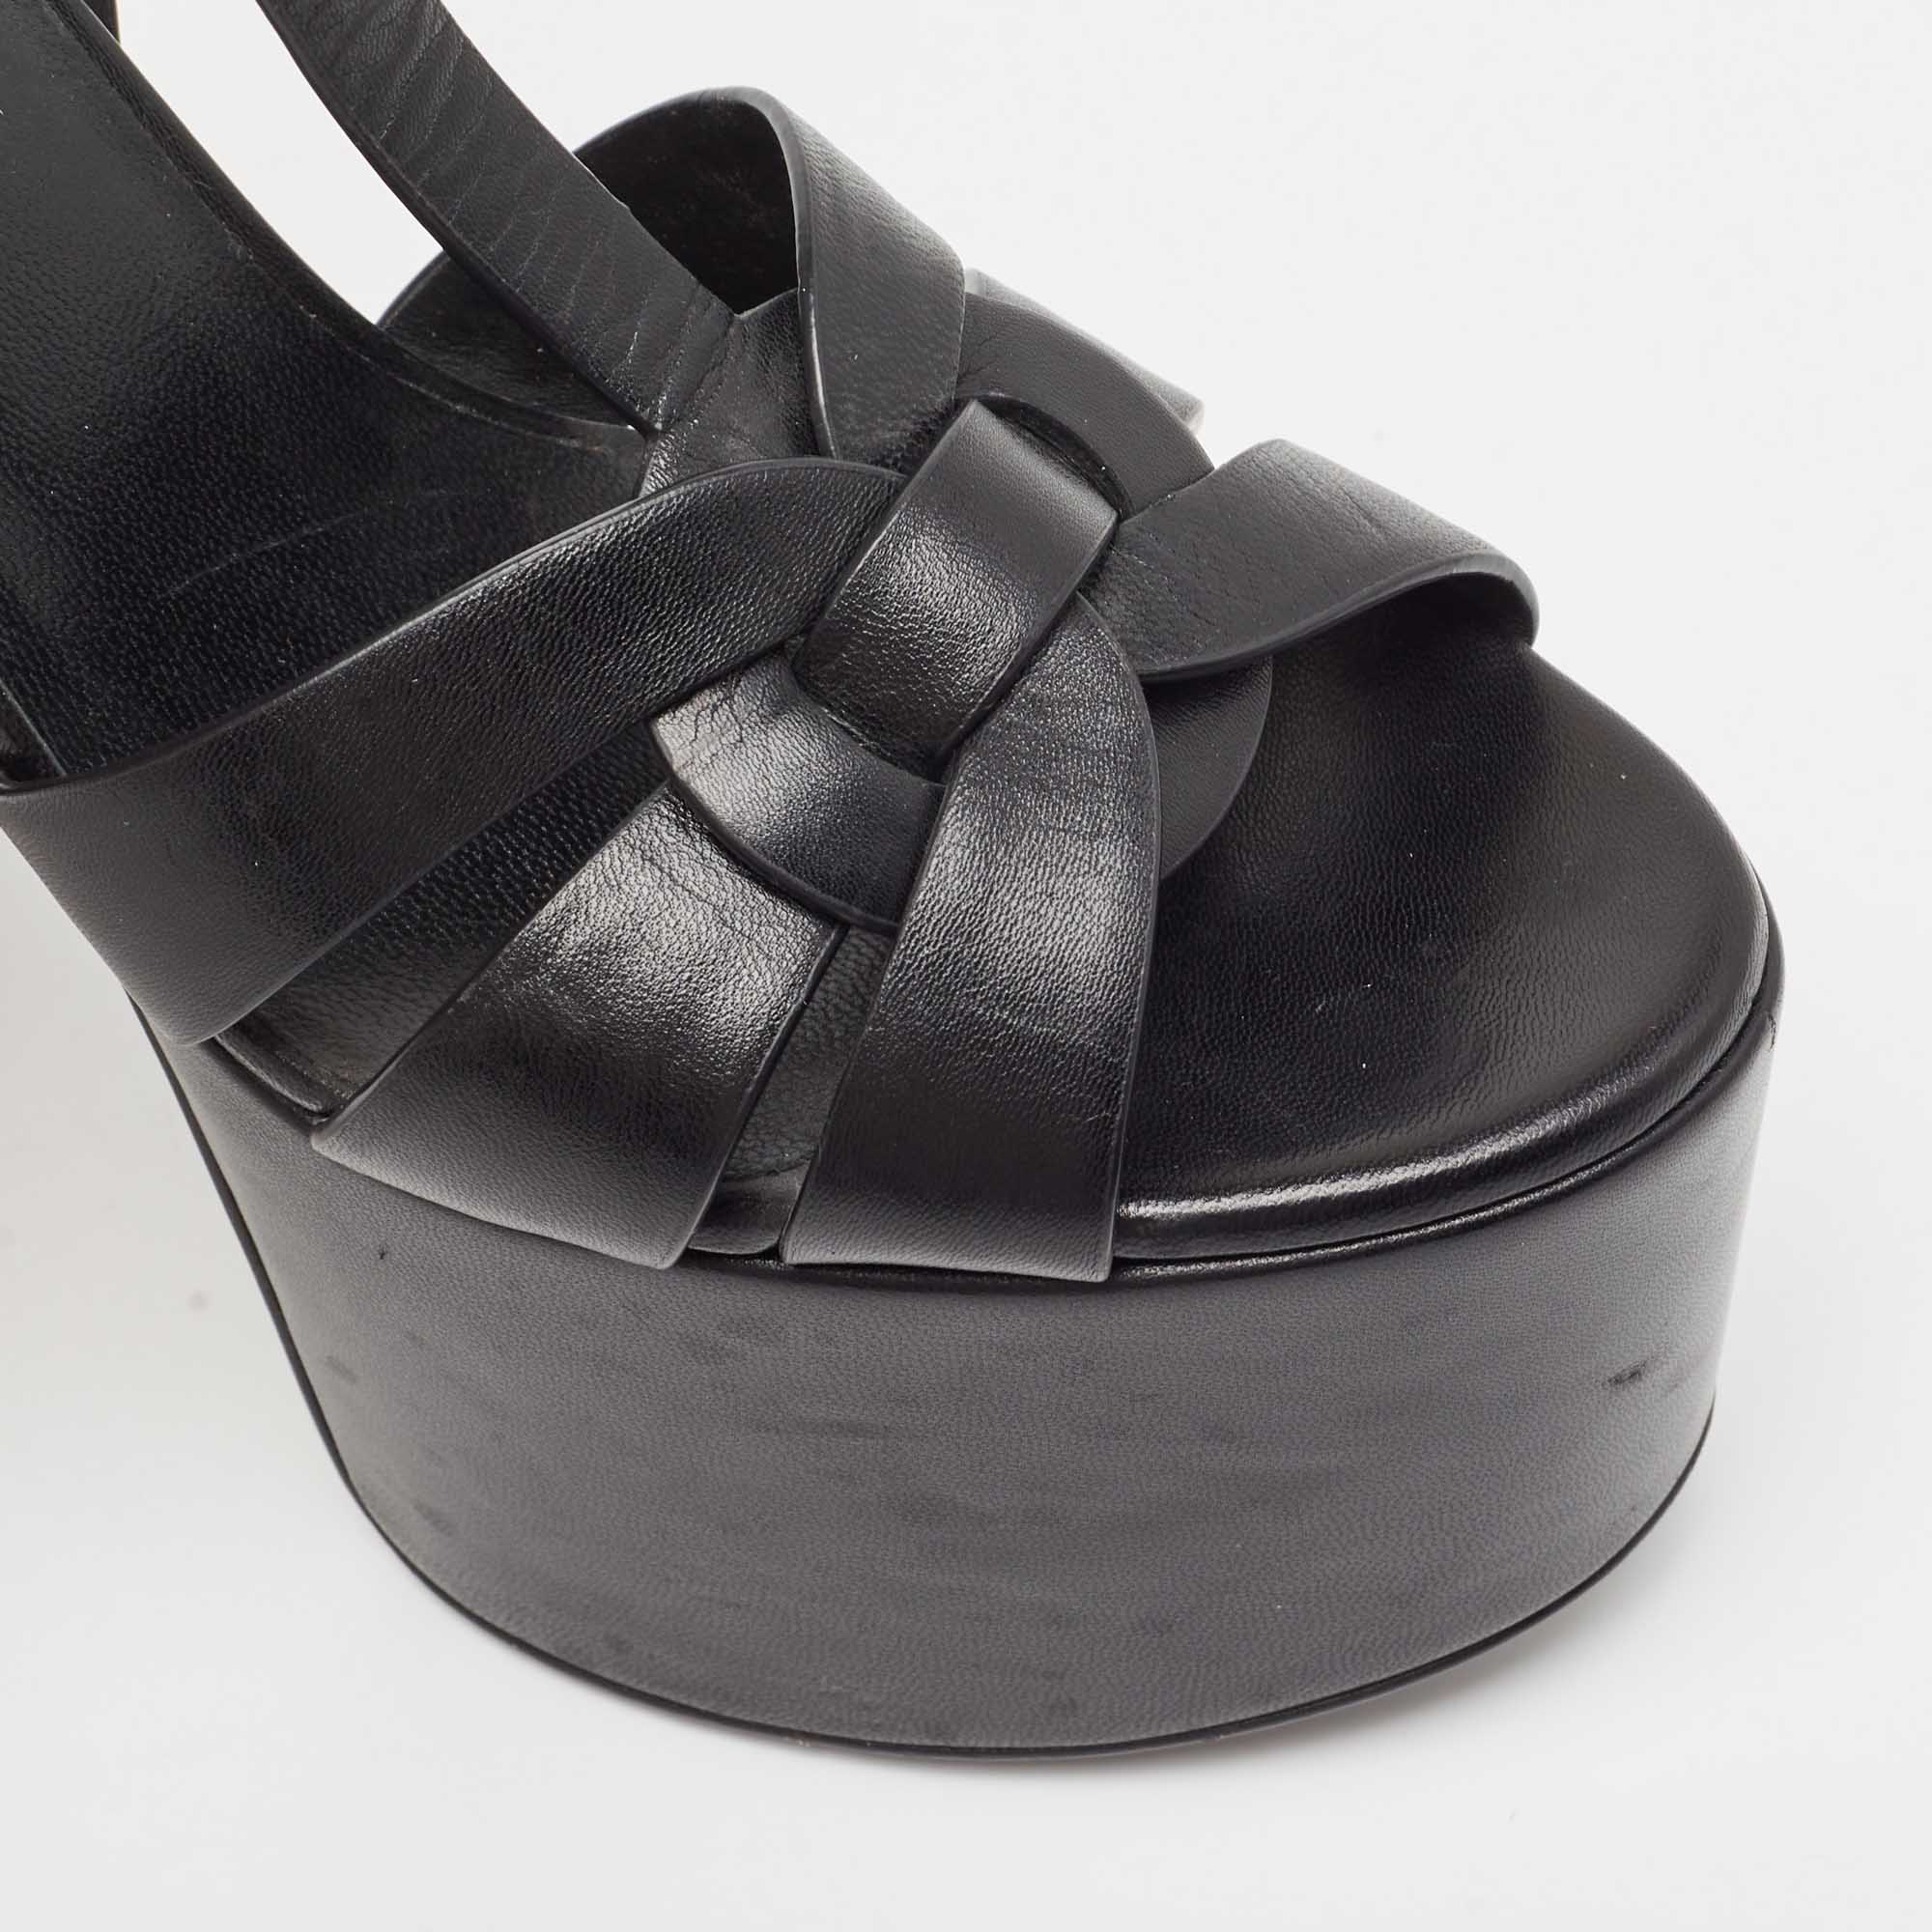 Saint Laurent Black Leather Platform Block Heel Ankle Strap Tribute Sandals Size 38.5